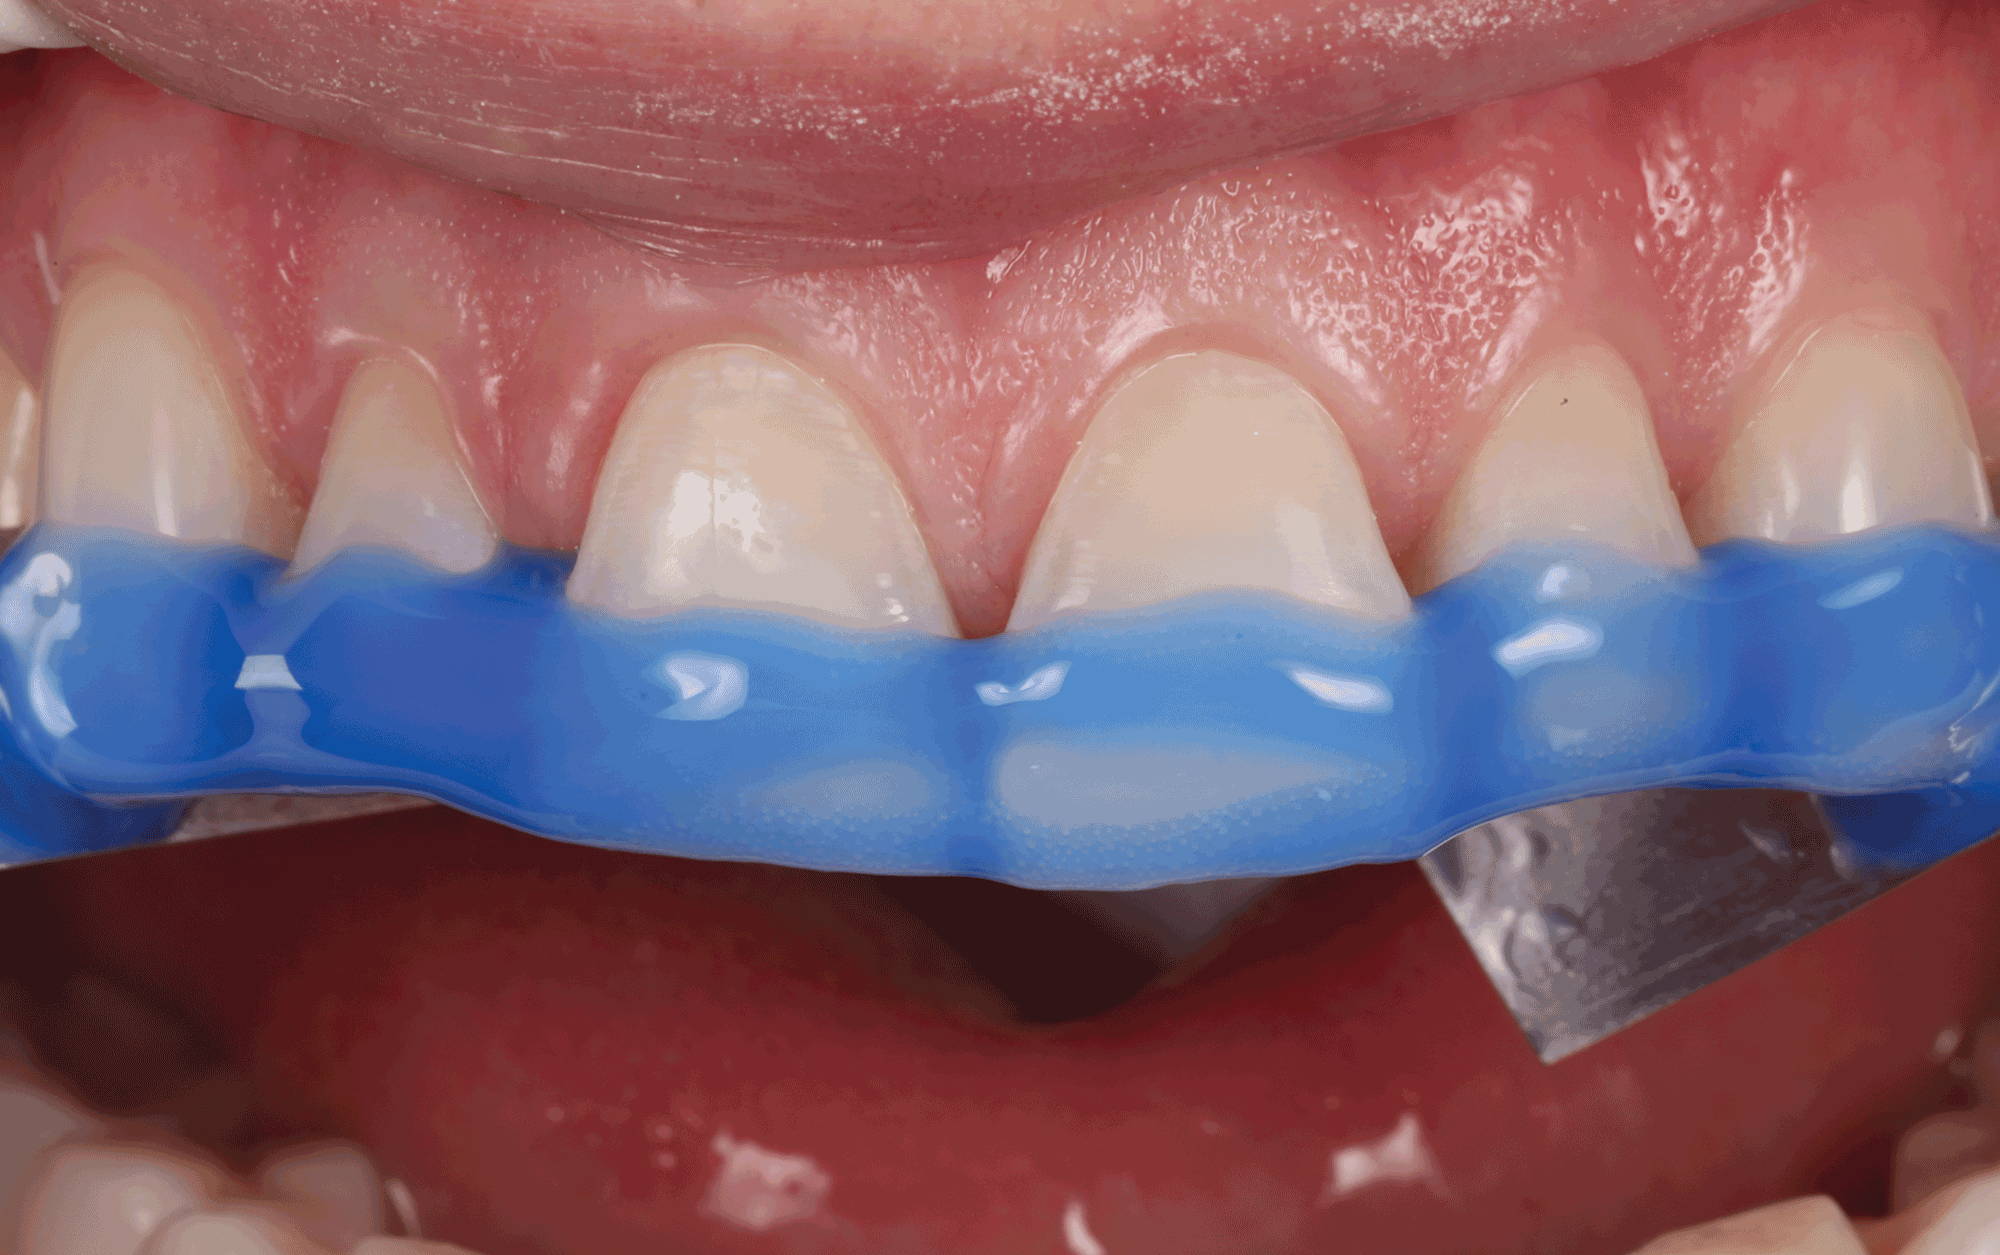 upper anterior teeth half covered in blue goo